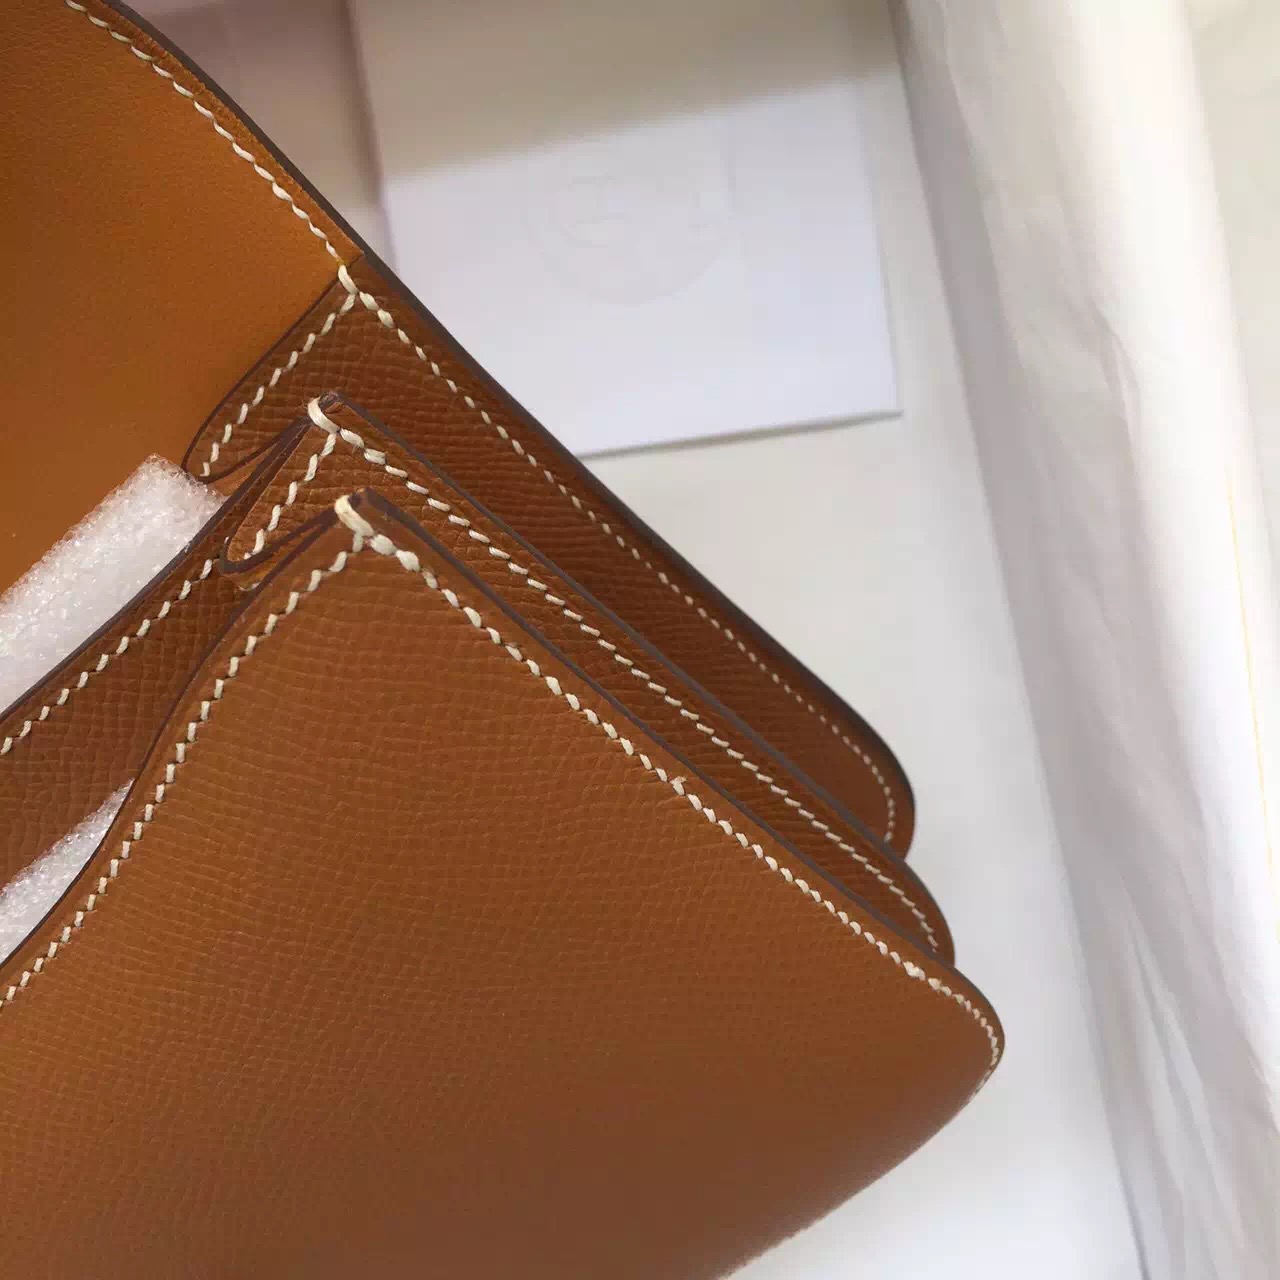 Cheap Hermes Constance Bag C37 Light Coffee Epsom Leather Ladies&#8217; Shoulder Bag